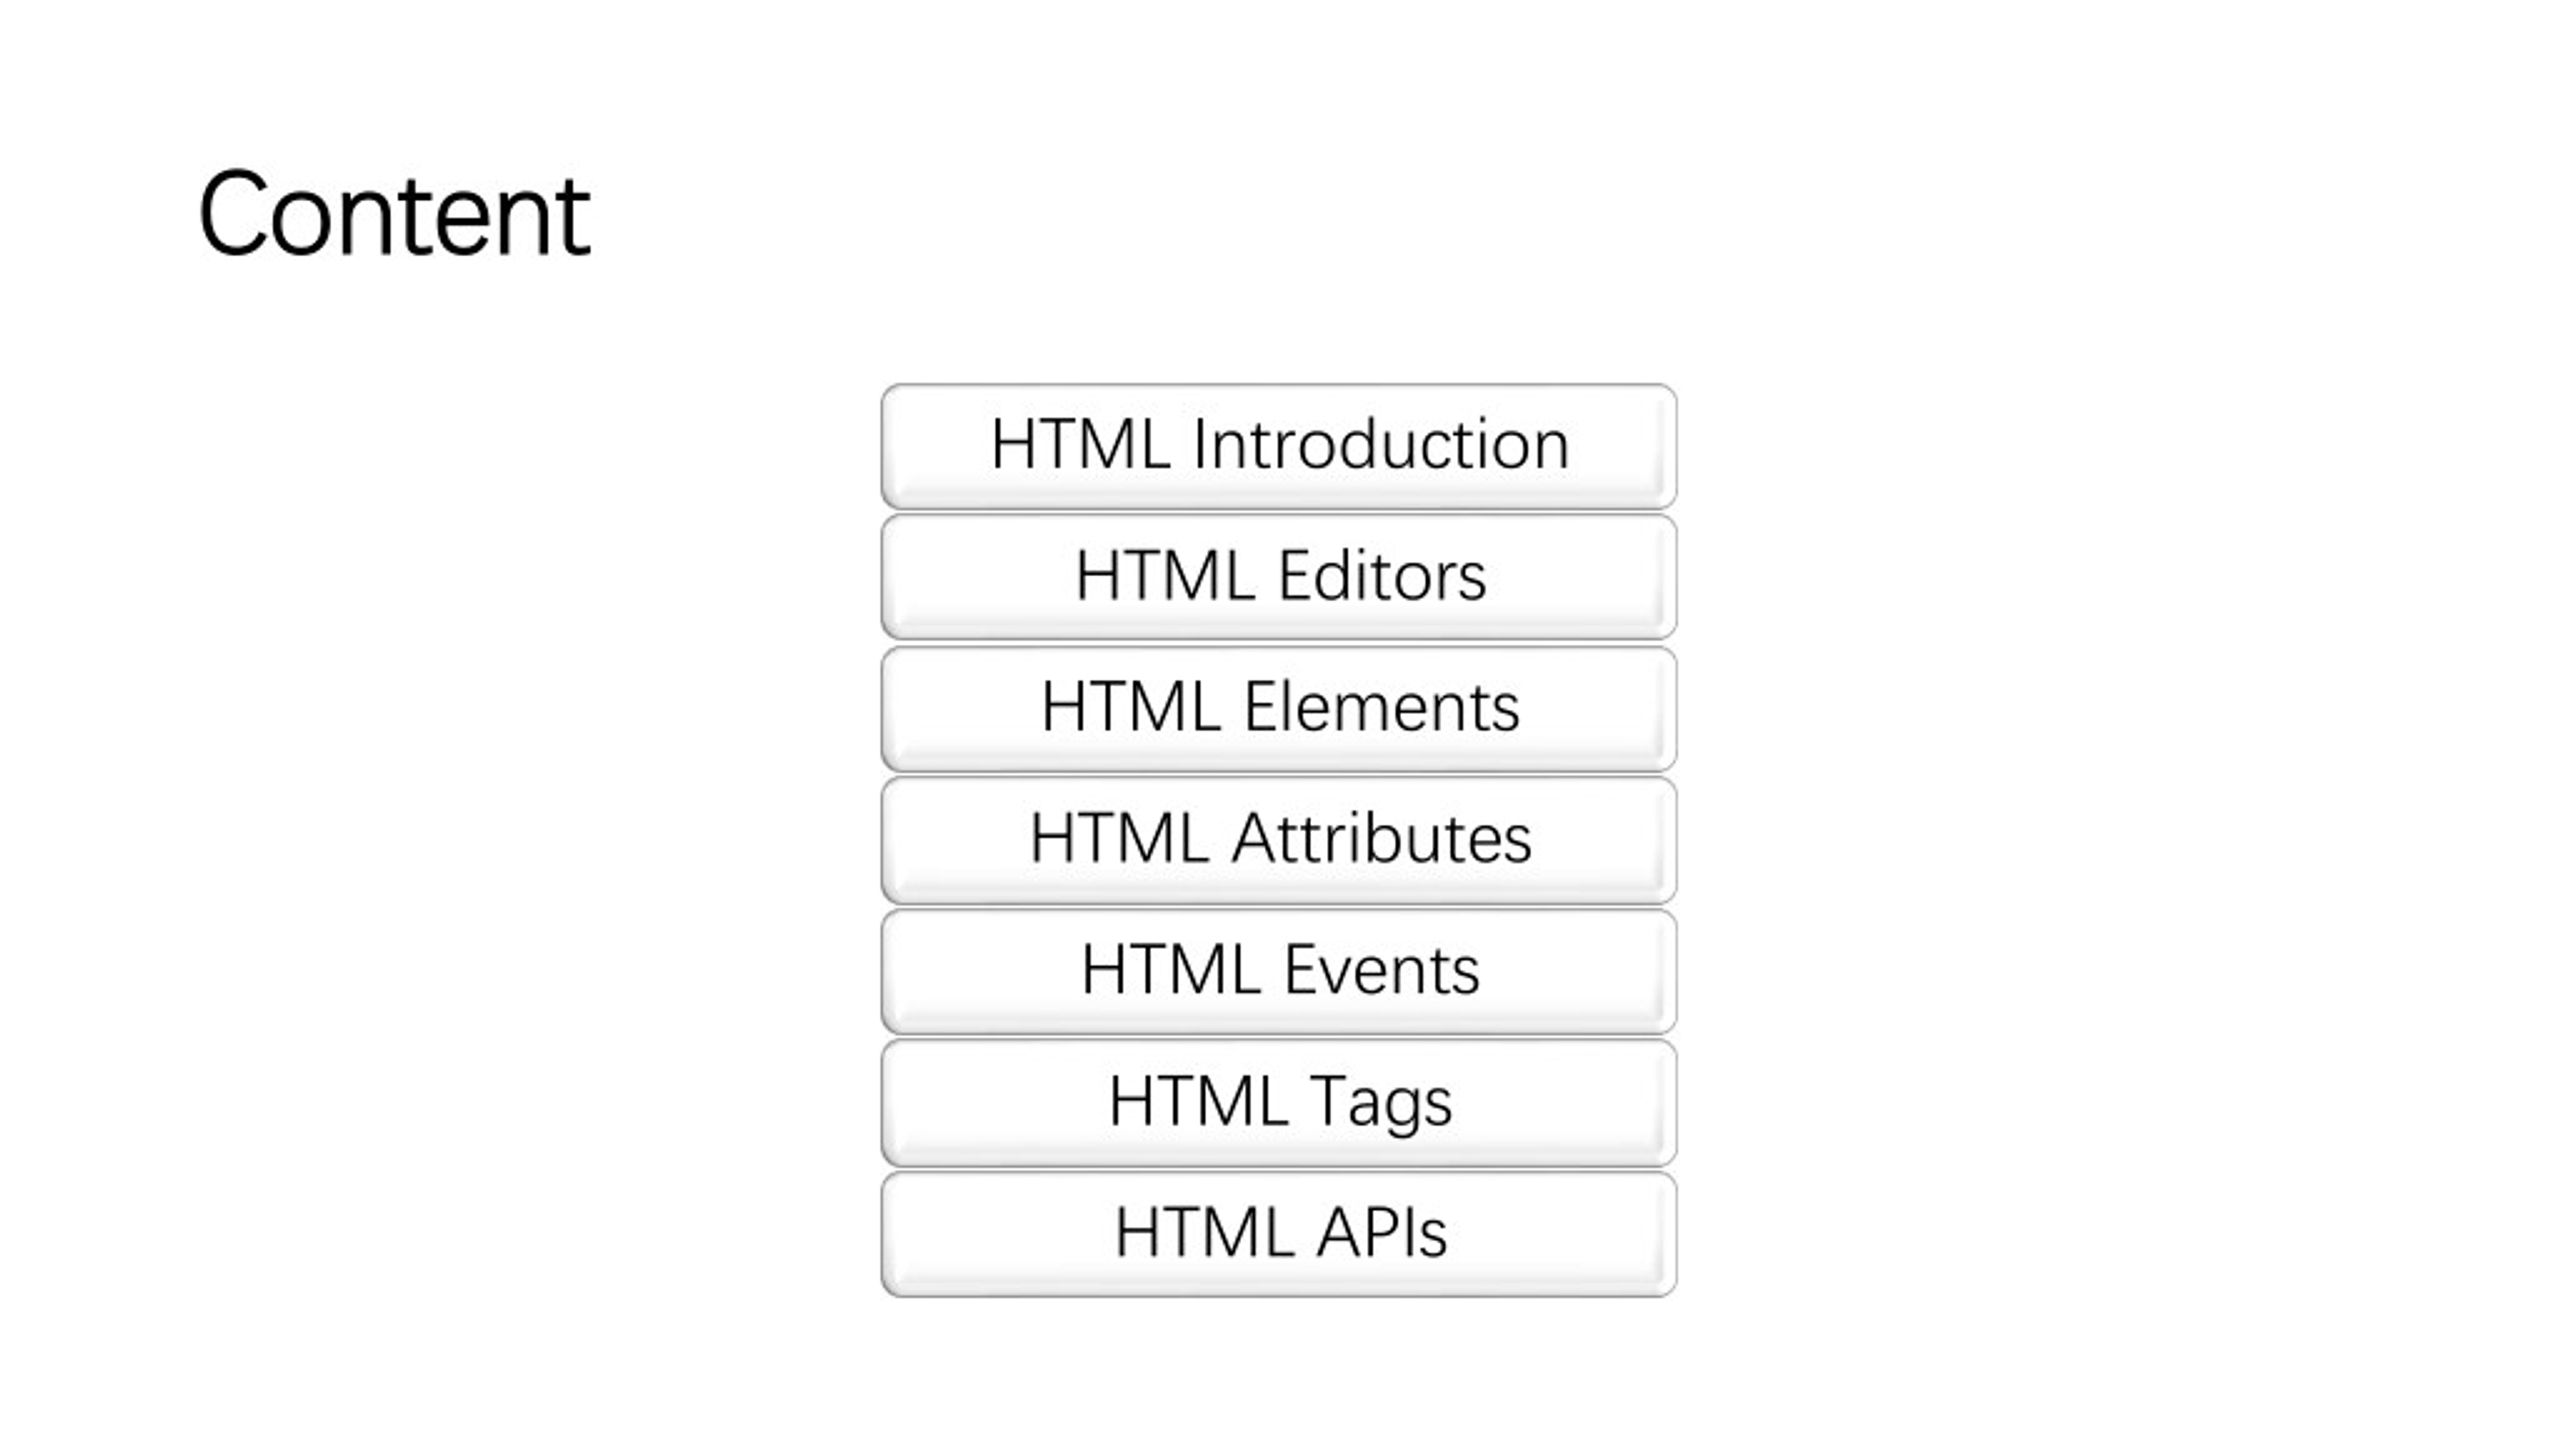 html presentation topics